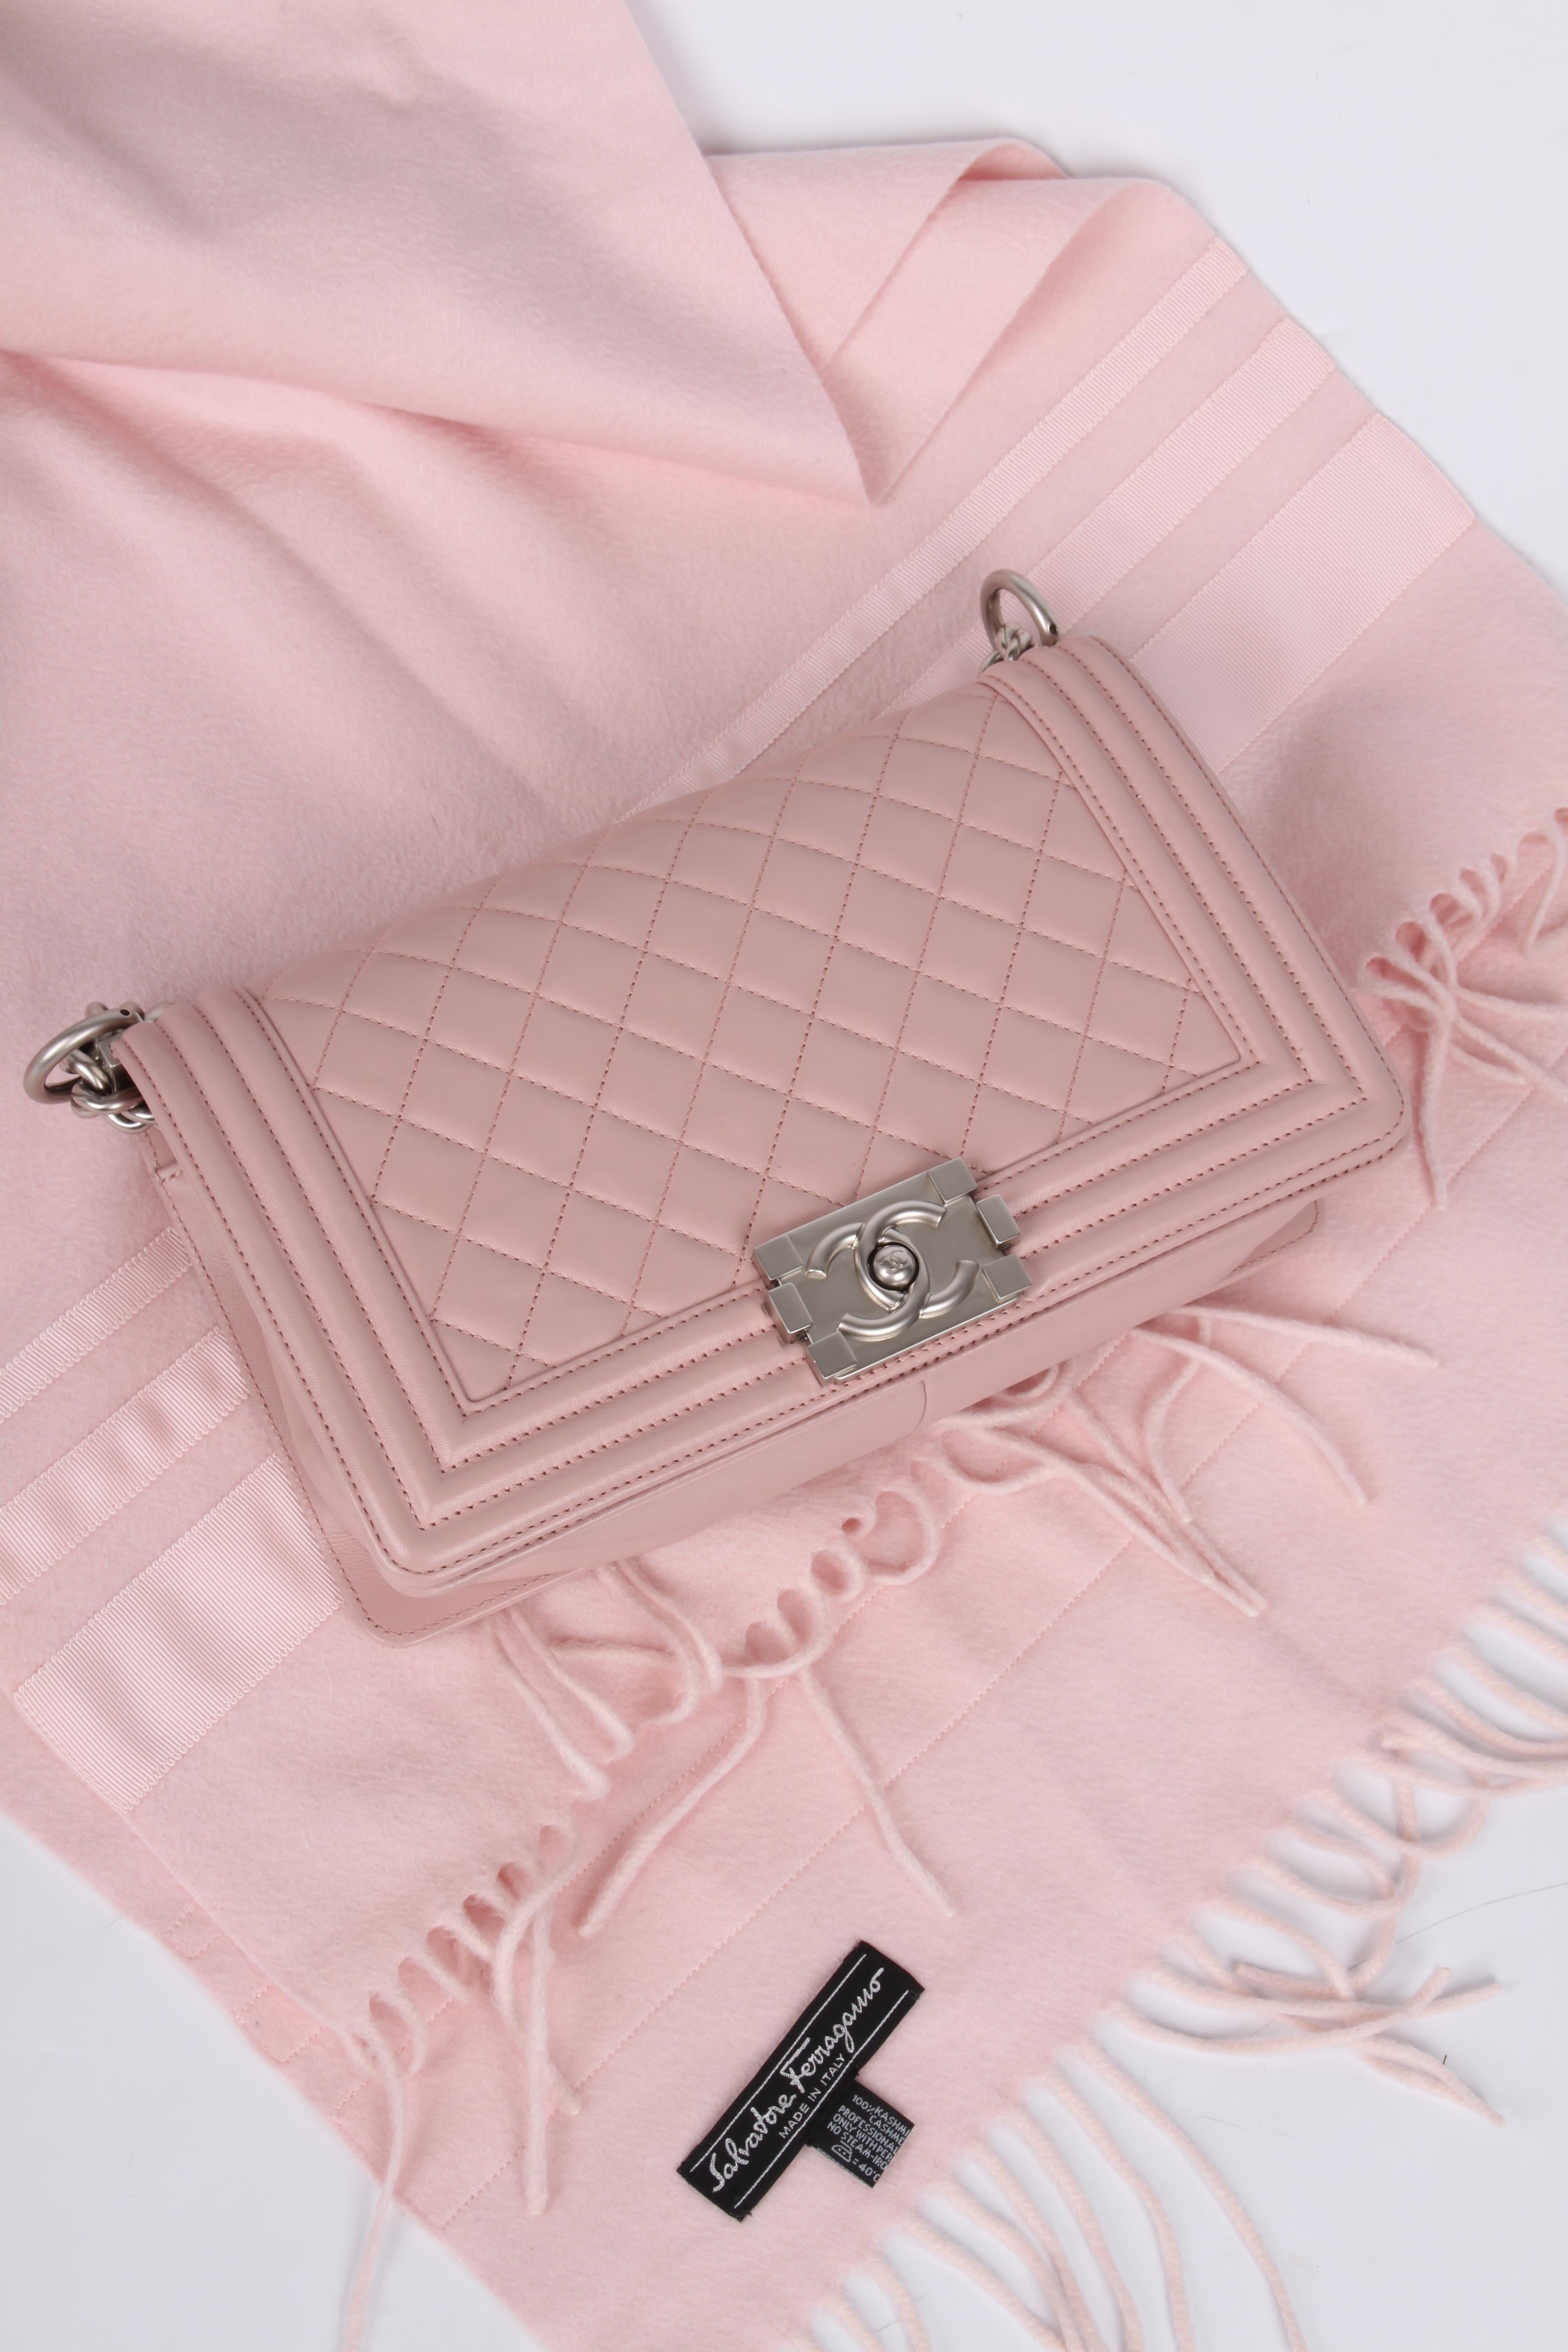 Chanel Le Boy Bag Medium - dusty pale pink For Sale 1